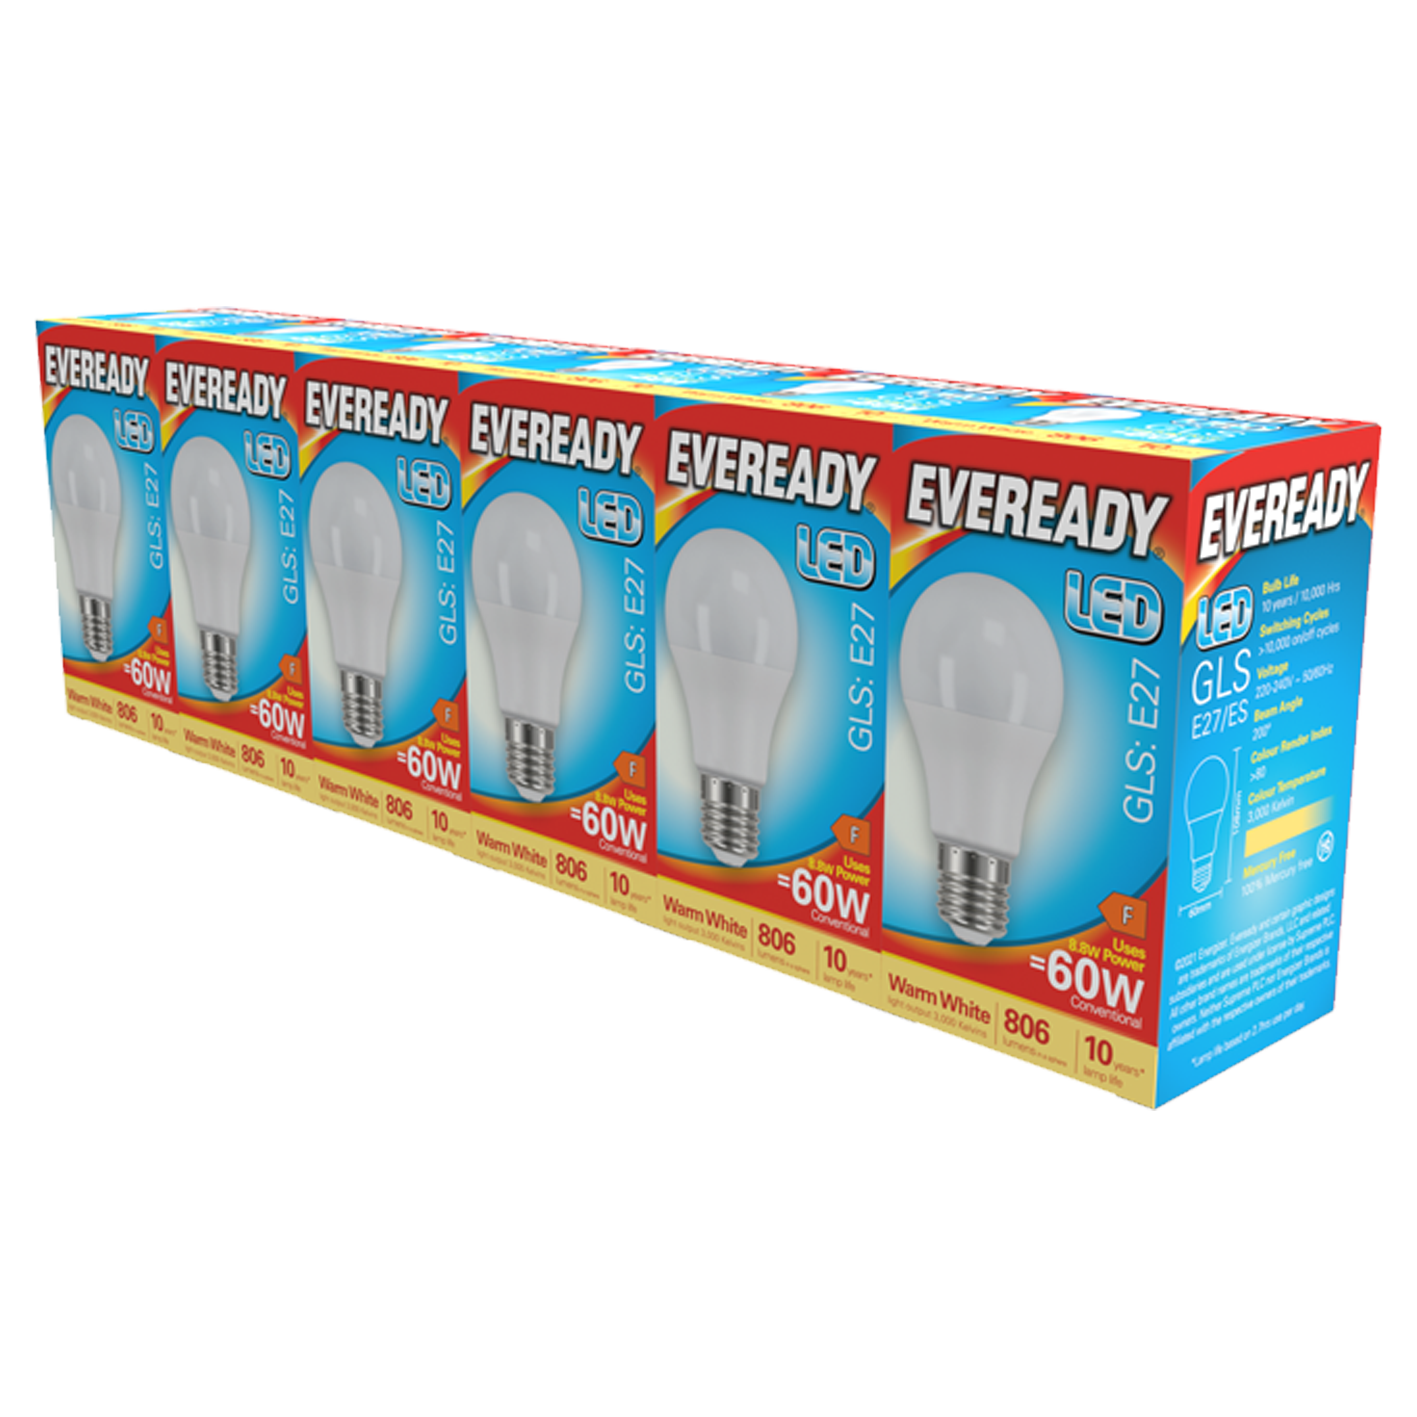 Eveready LED GLS E27 (ES) 806lm 8.8W 3000K (Warm White) Pack of 5+1